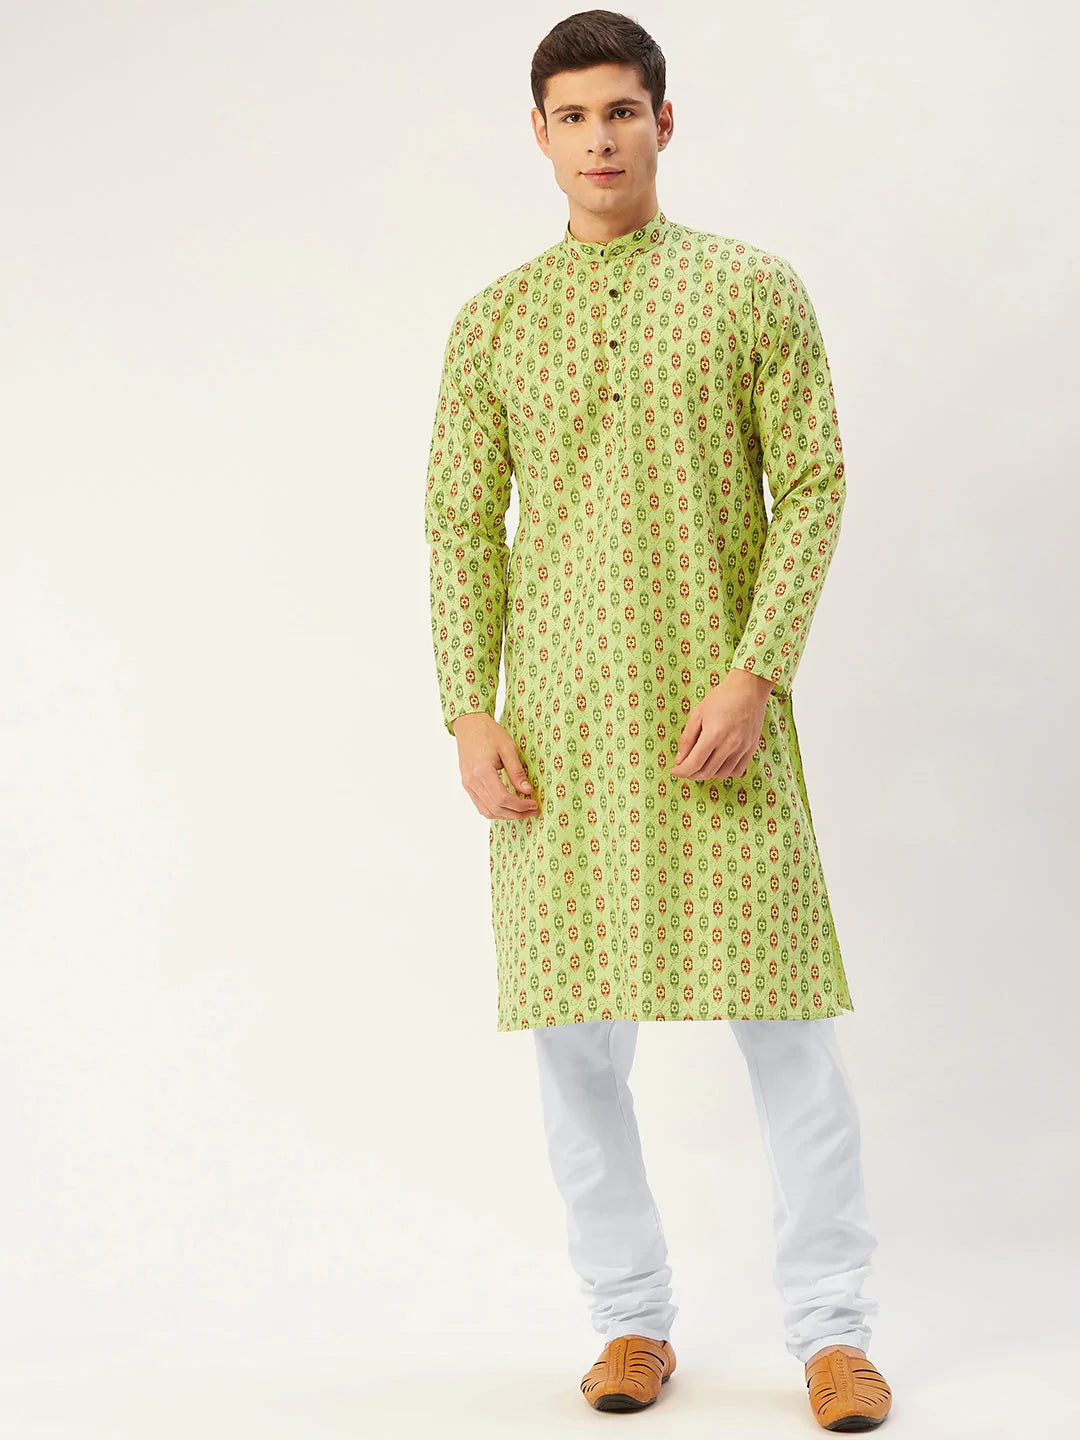 Jompers Men's Green Cotton Ikat printed kurta Only( KO 651 Green )